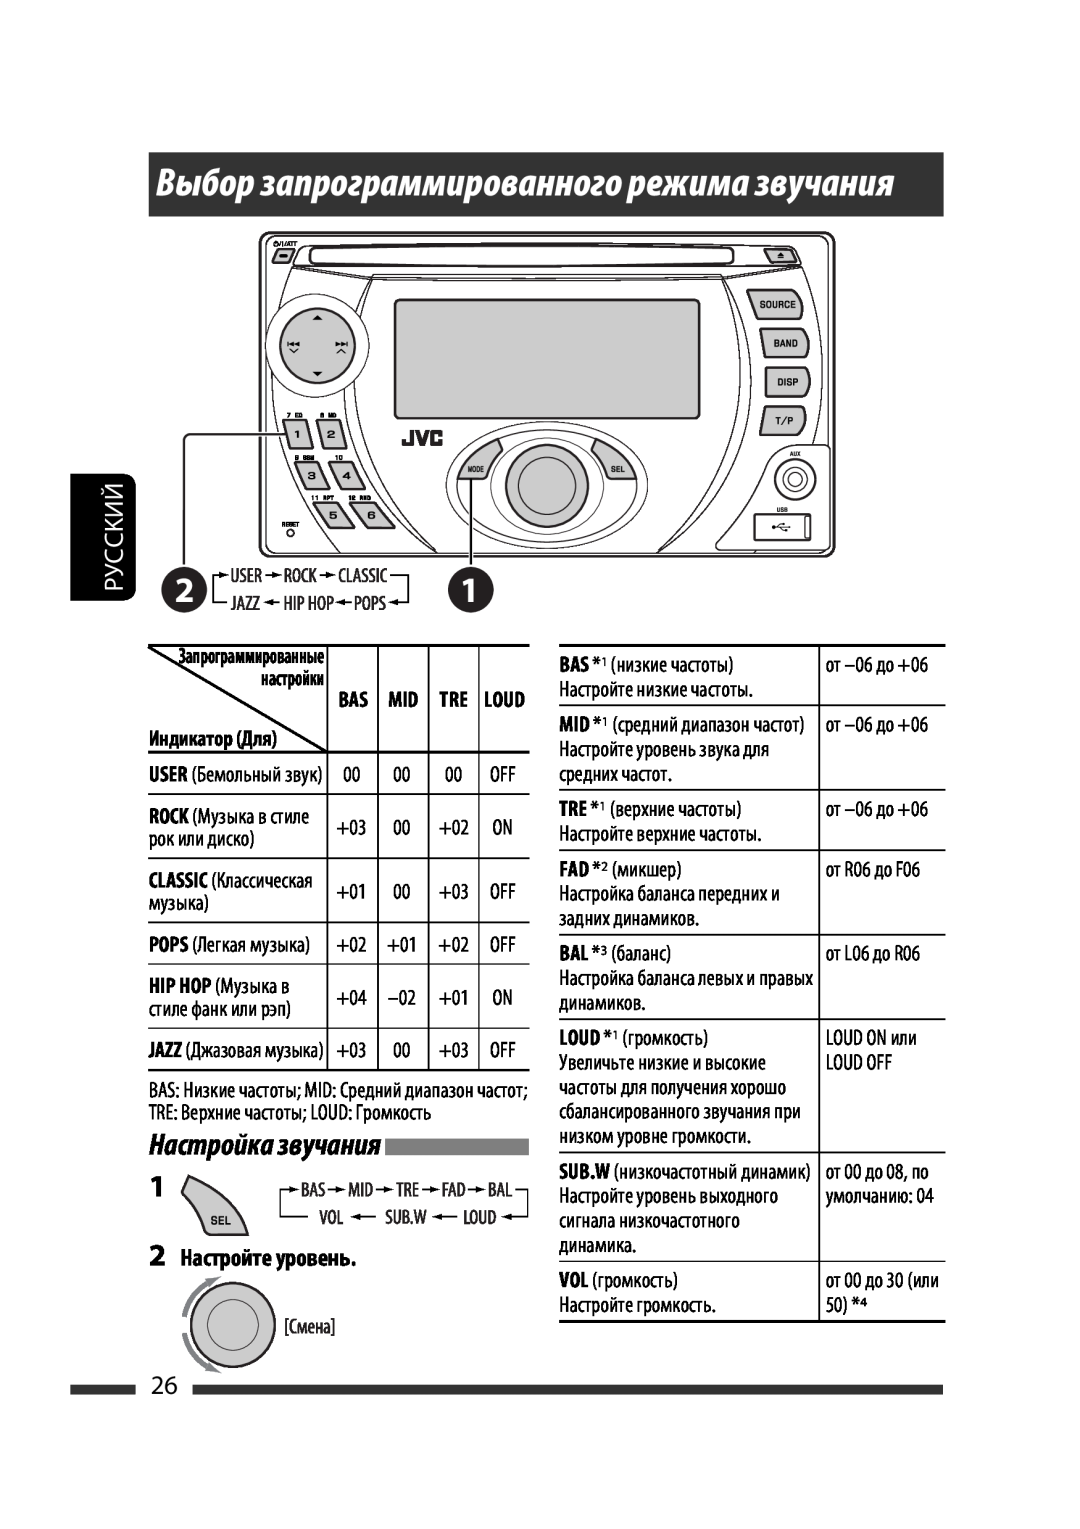 JVC KW-XG701 manual Выбор запрограммированного режима звучания, Настройка звучания, 2Настройте уровень, настройки, Руcckий 